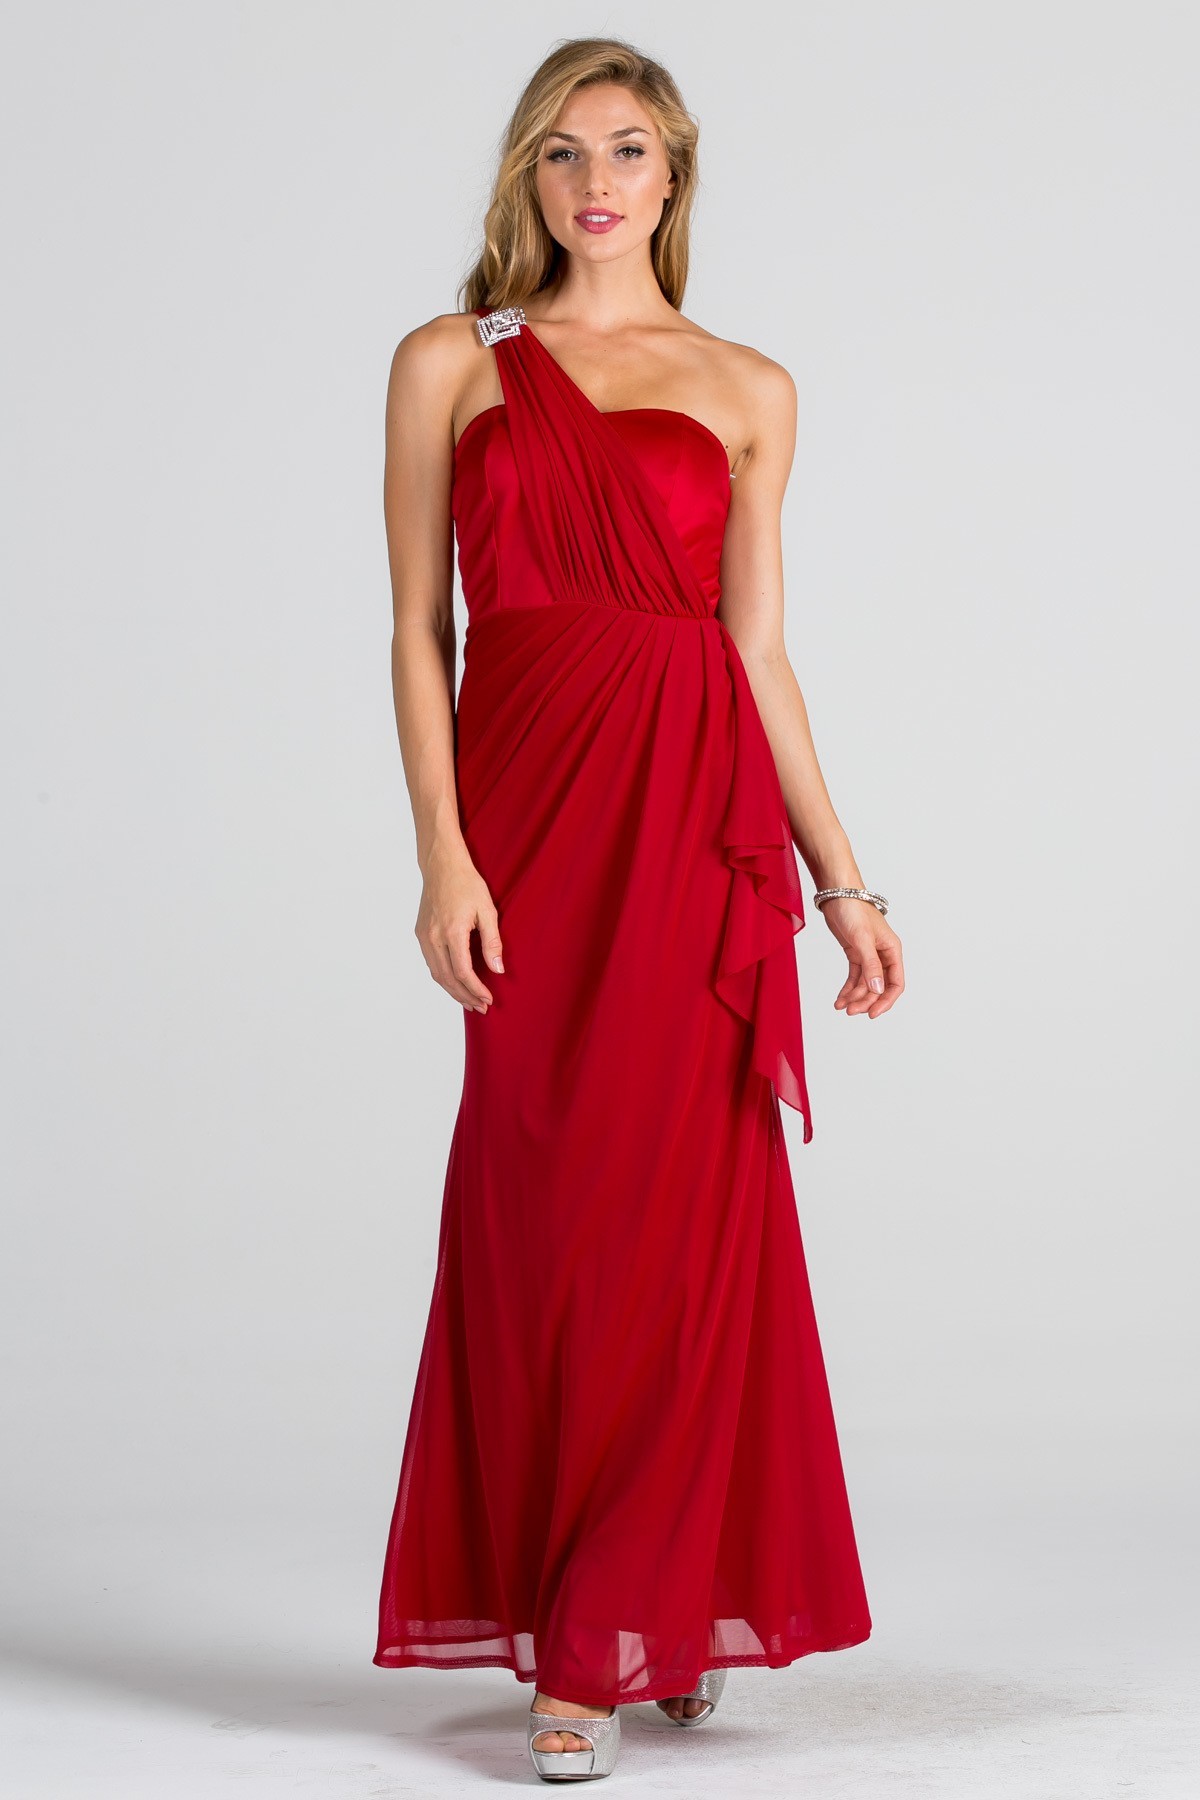 La Scala > Dresses > #23831 − LAShowroom.com